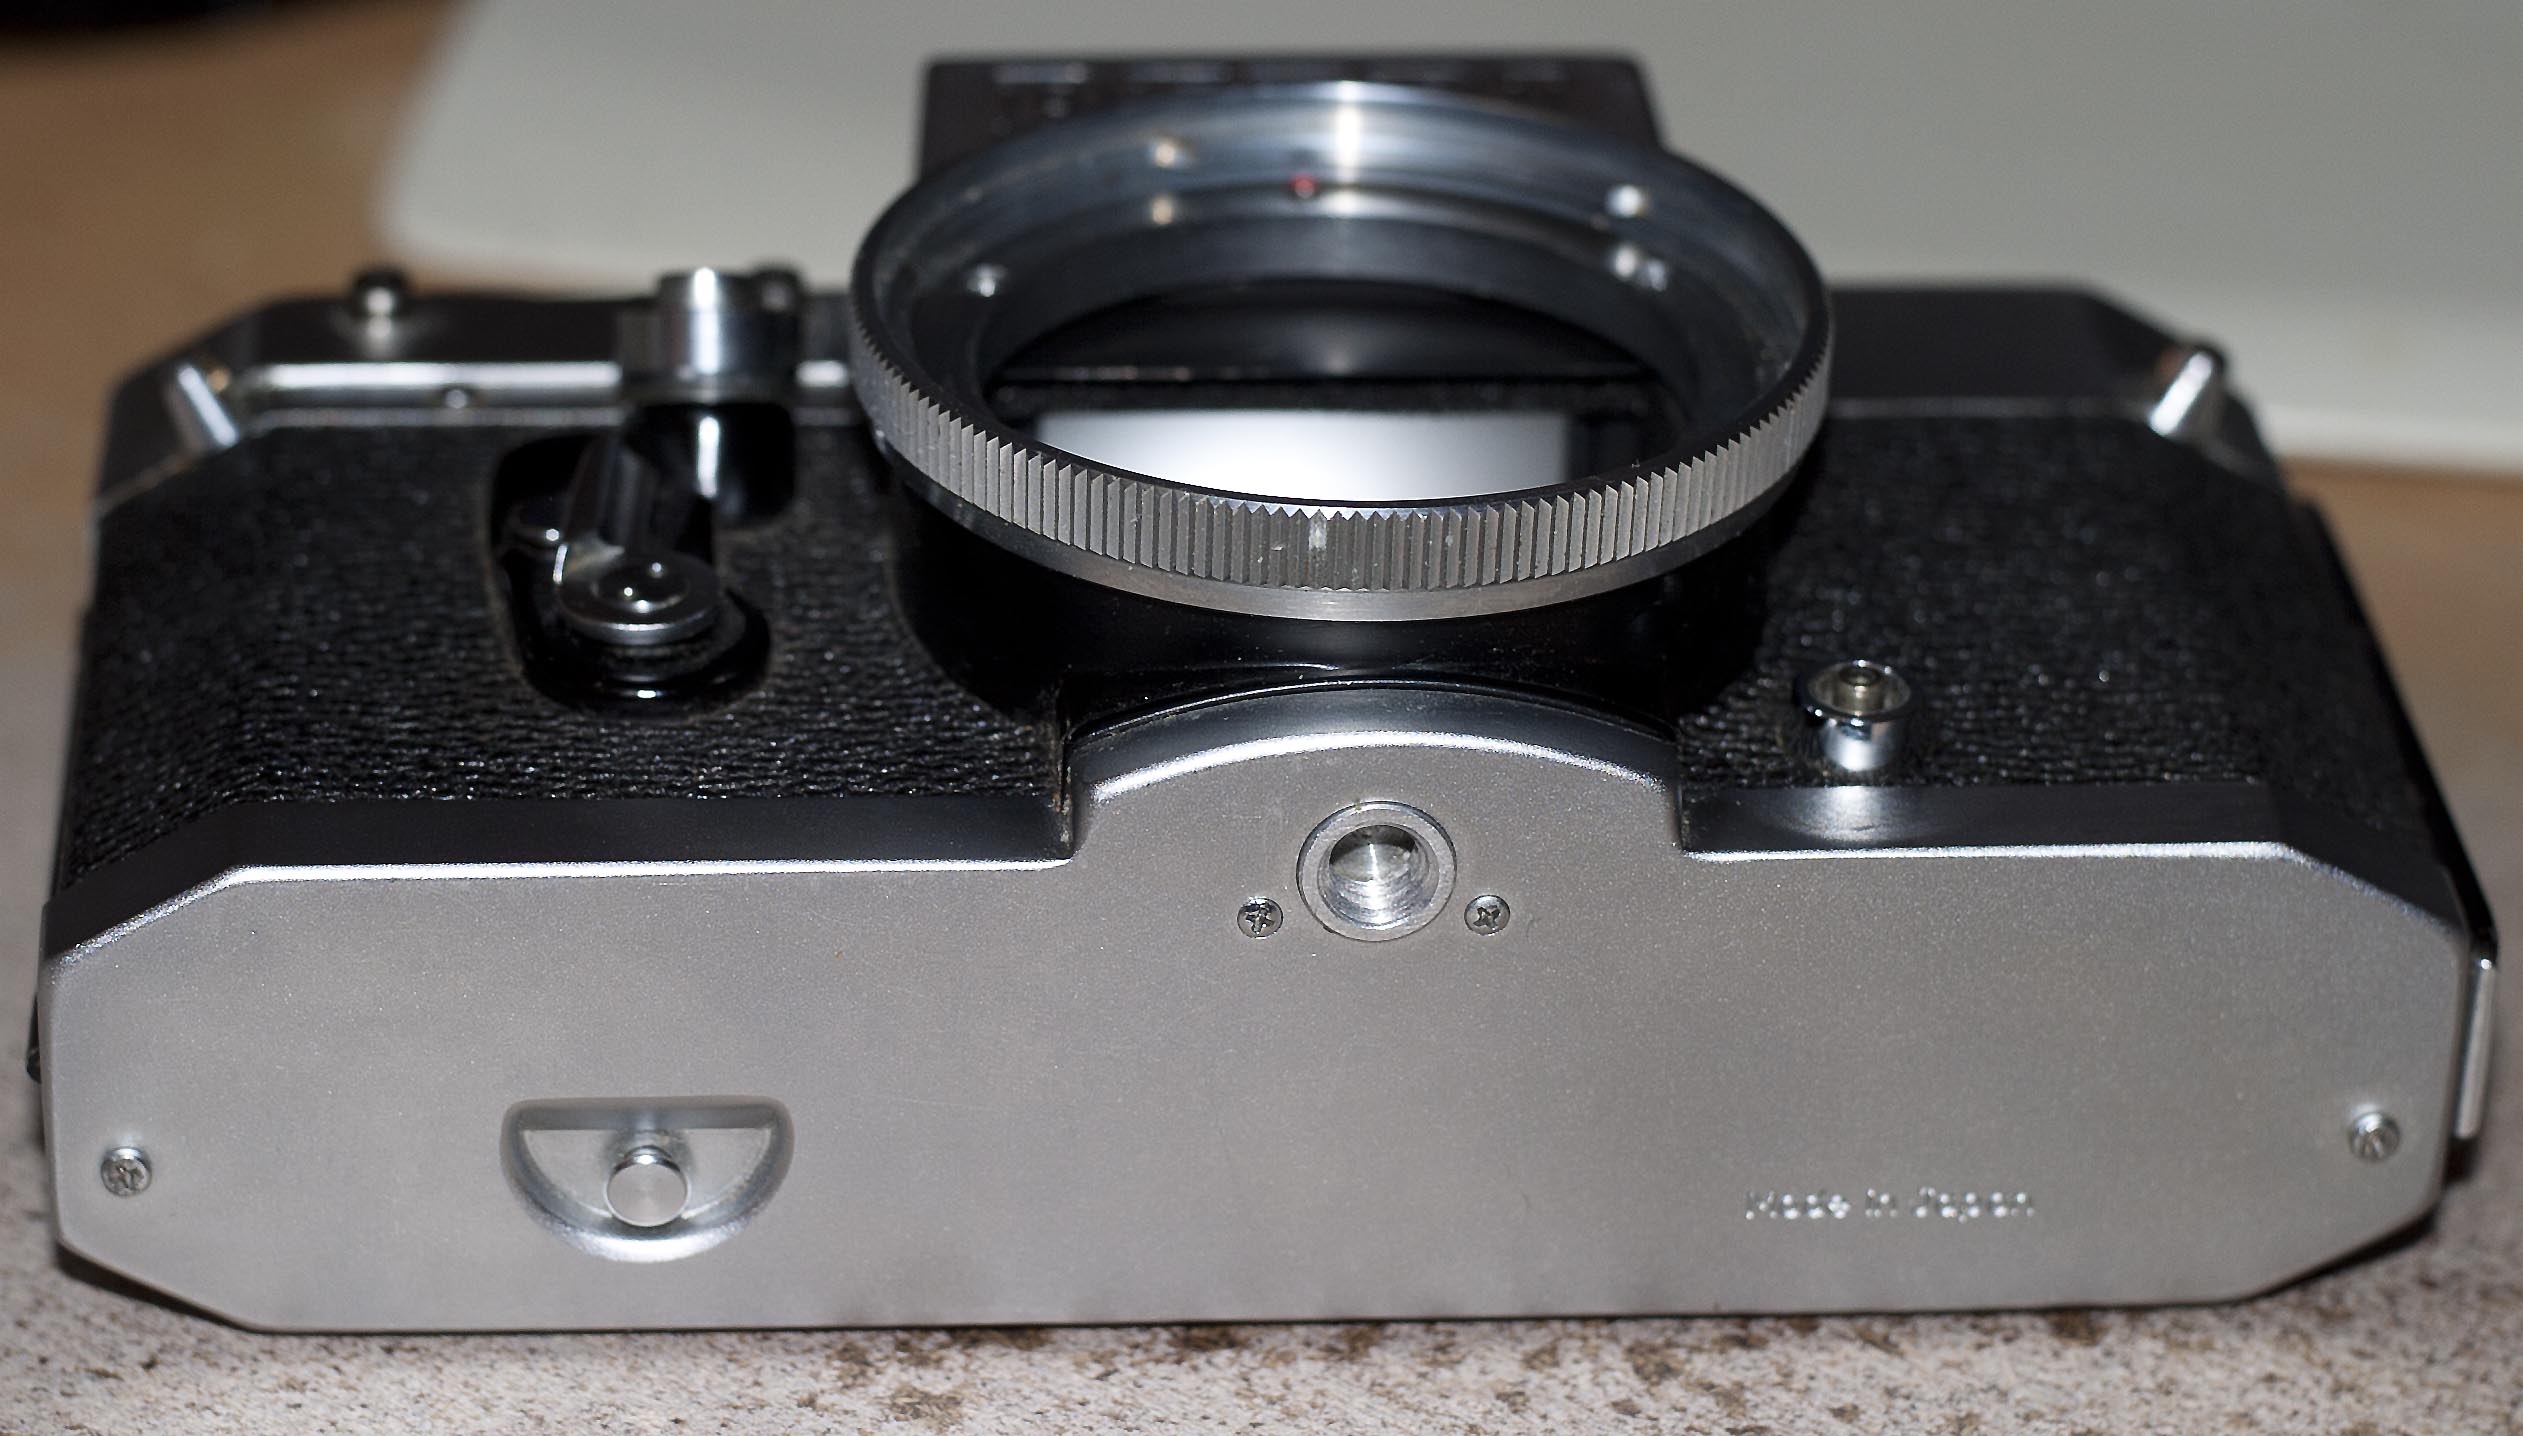 Petri V6 SLR with 1.8/55 and 4/200 lenses